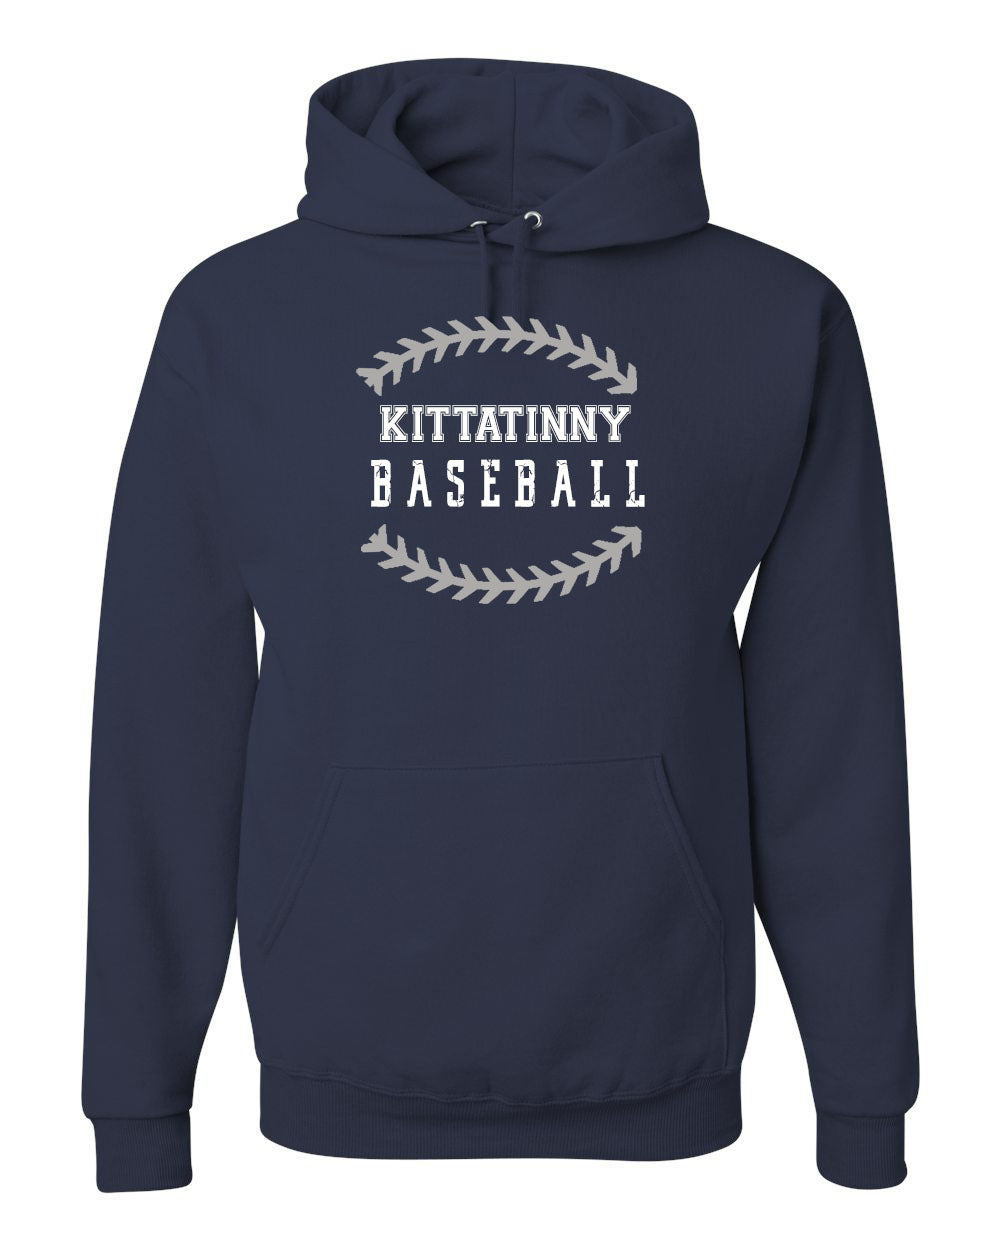 Kittatinny Baseball Hooded Sweatshirt, Stillwater